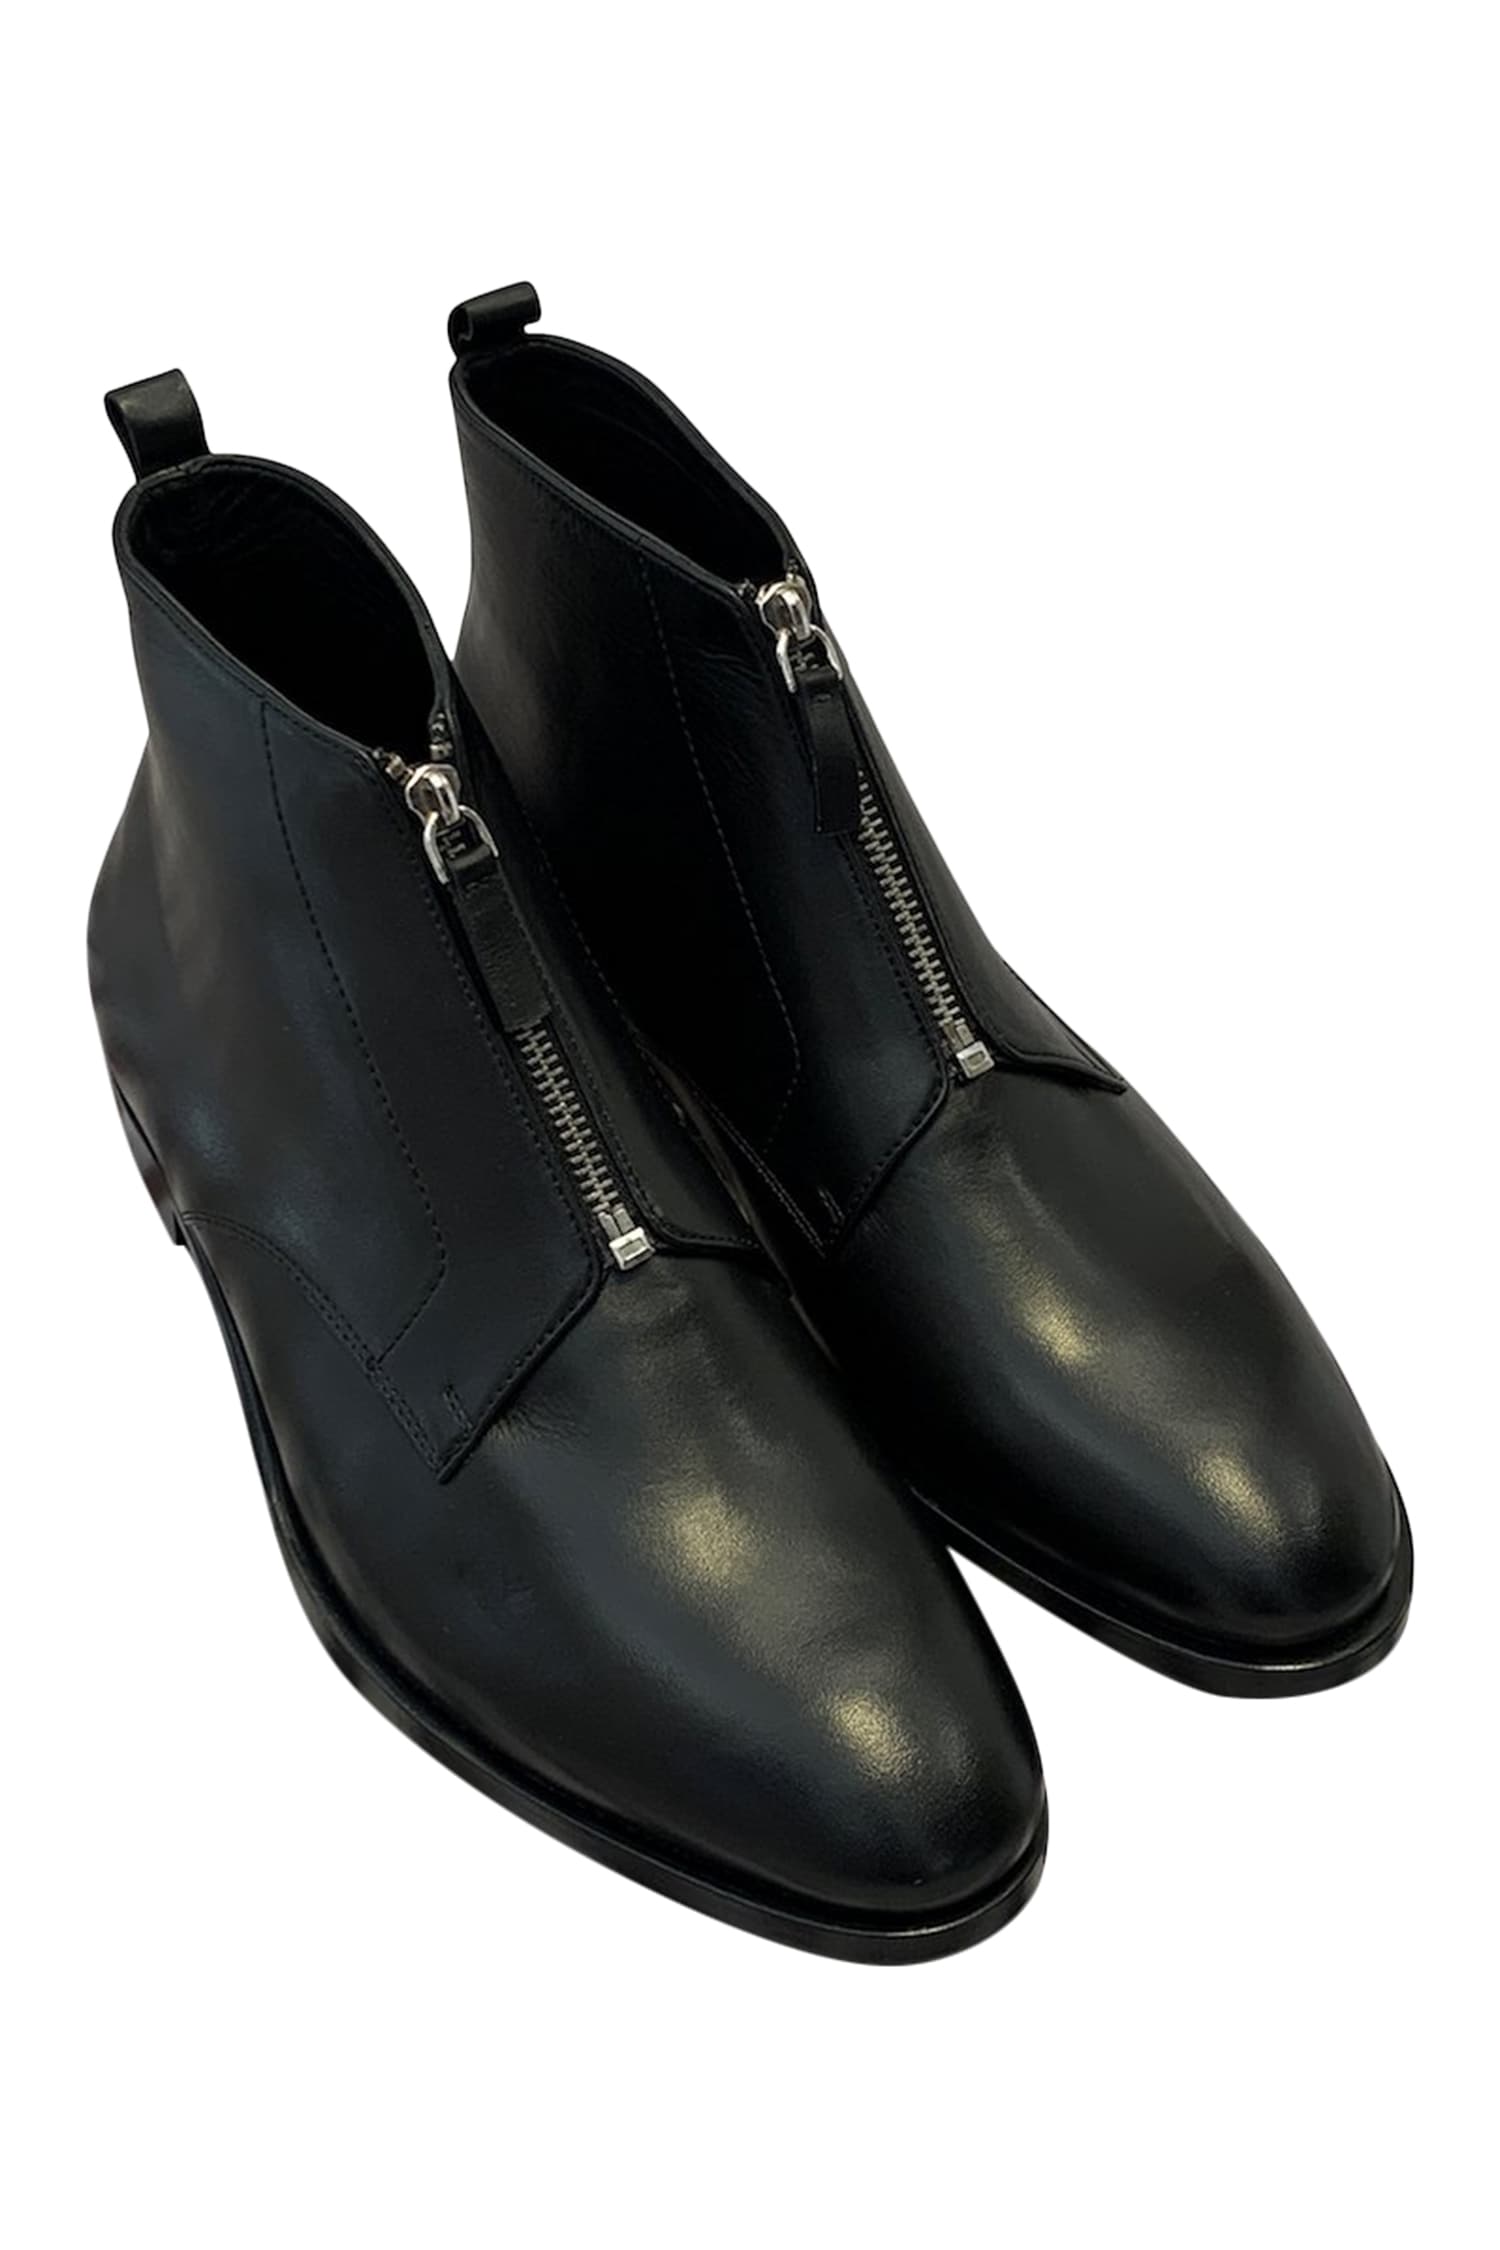 Dmodot Black Ankle Zipper Boots